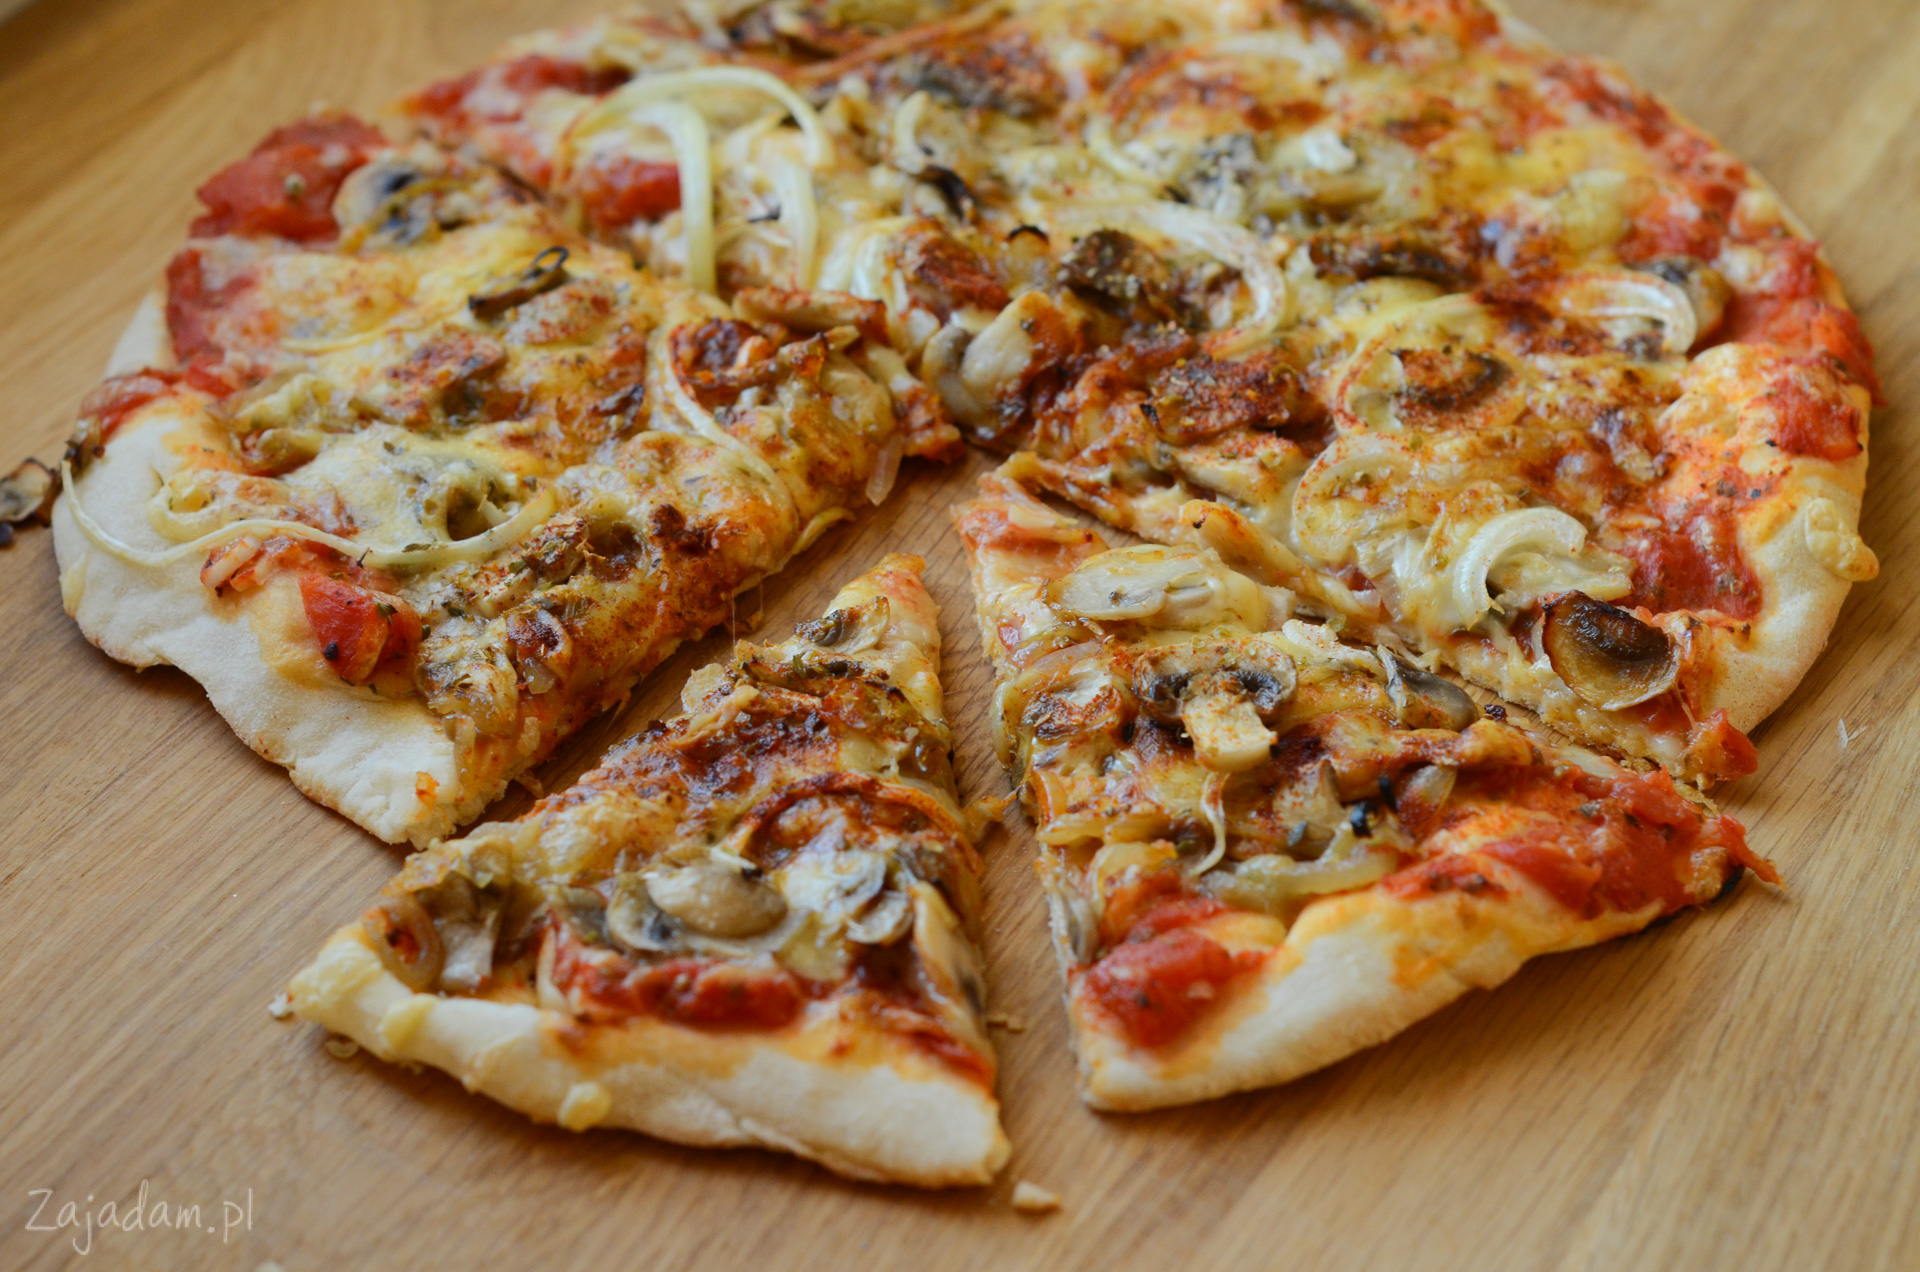 Домашняя пицца 10. Пицца с грибами. Домашняя пицца с грибами. Пицца с грибами и колбасой. Пицца домашняя в духовке.